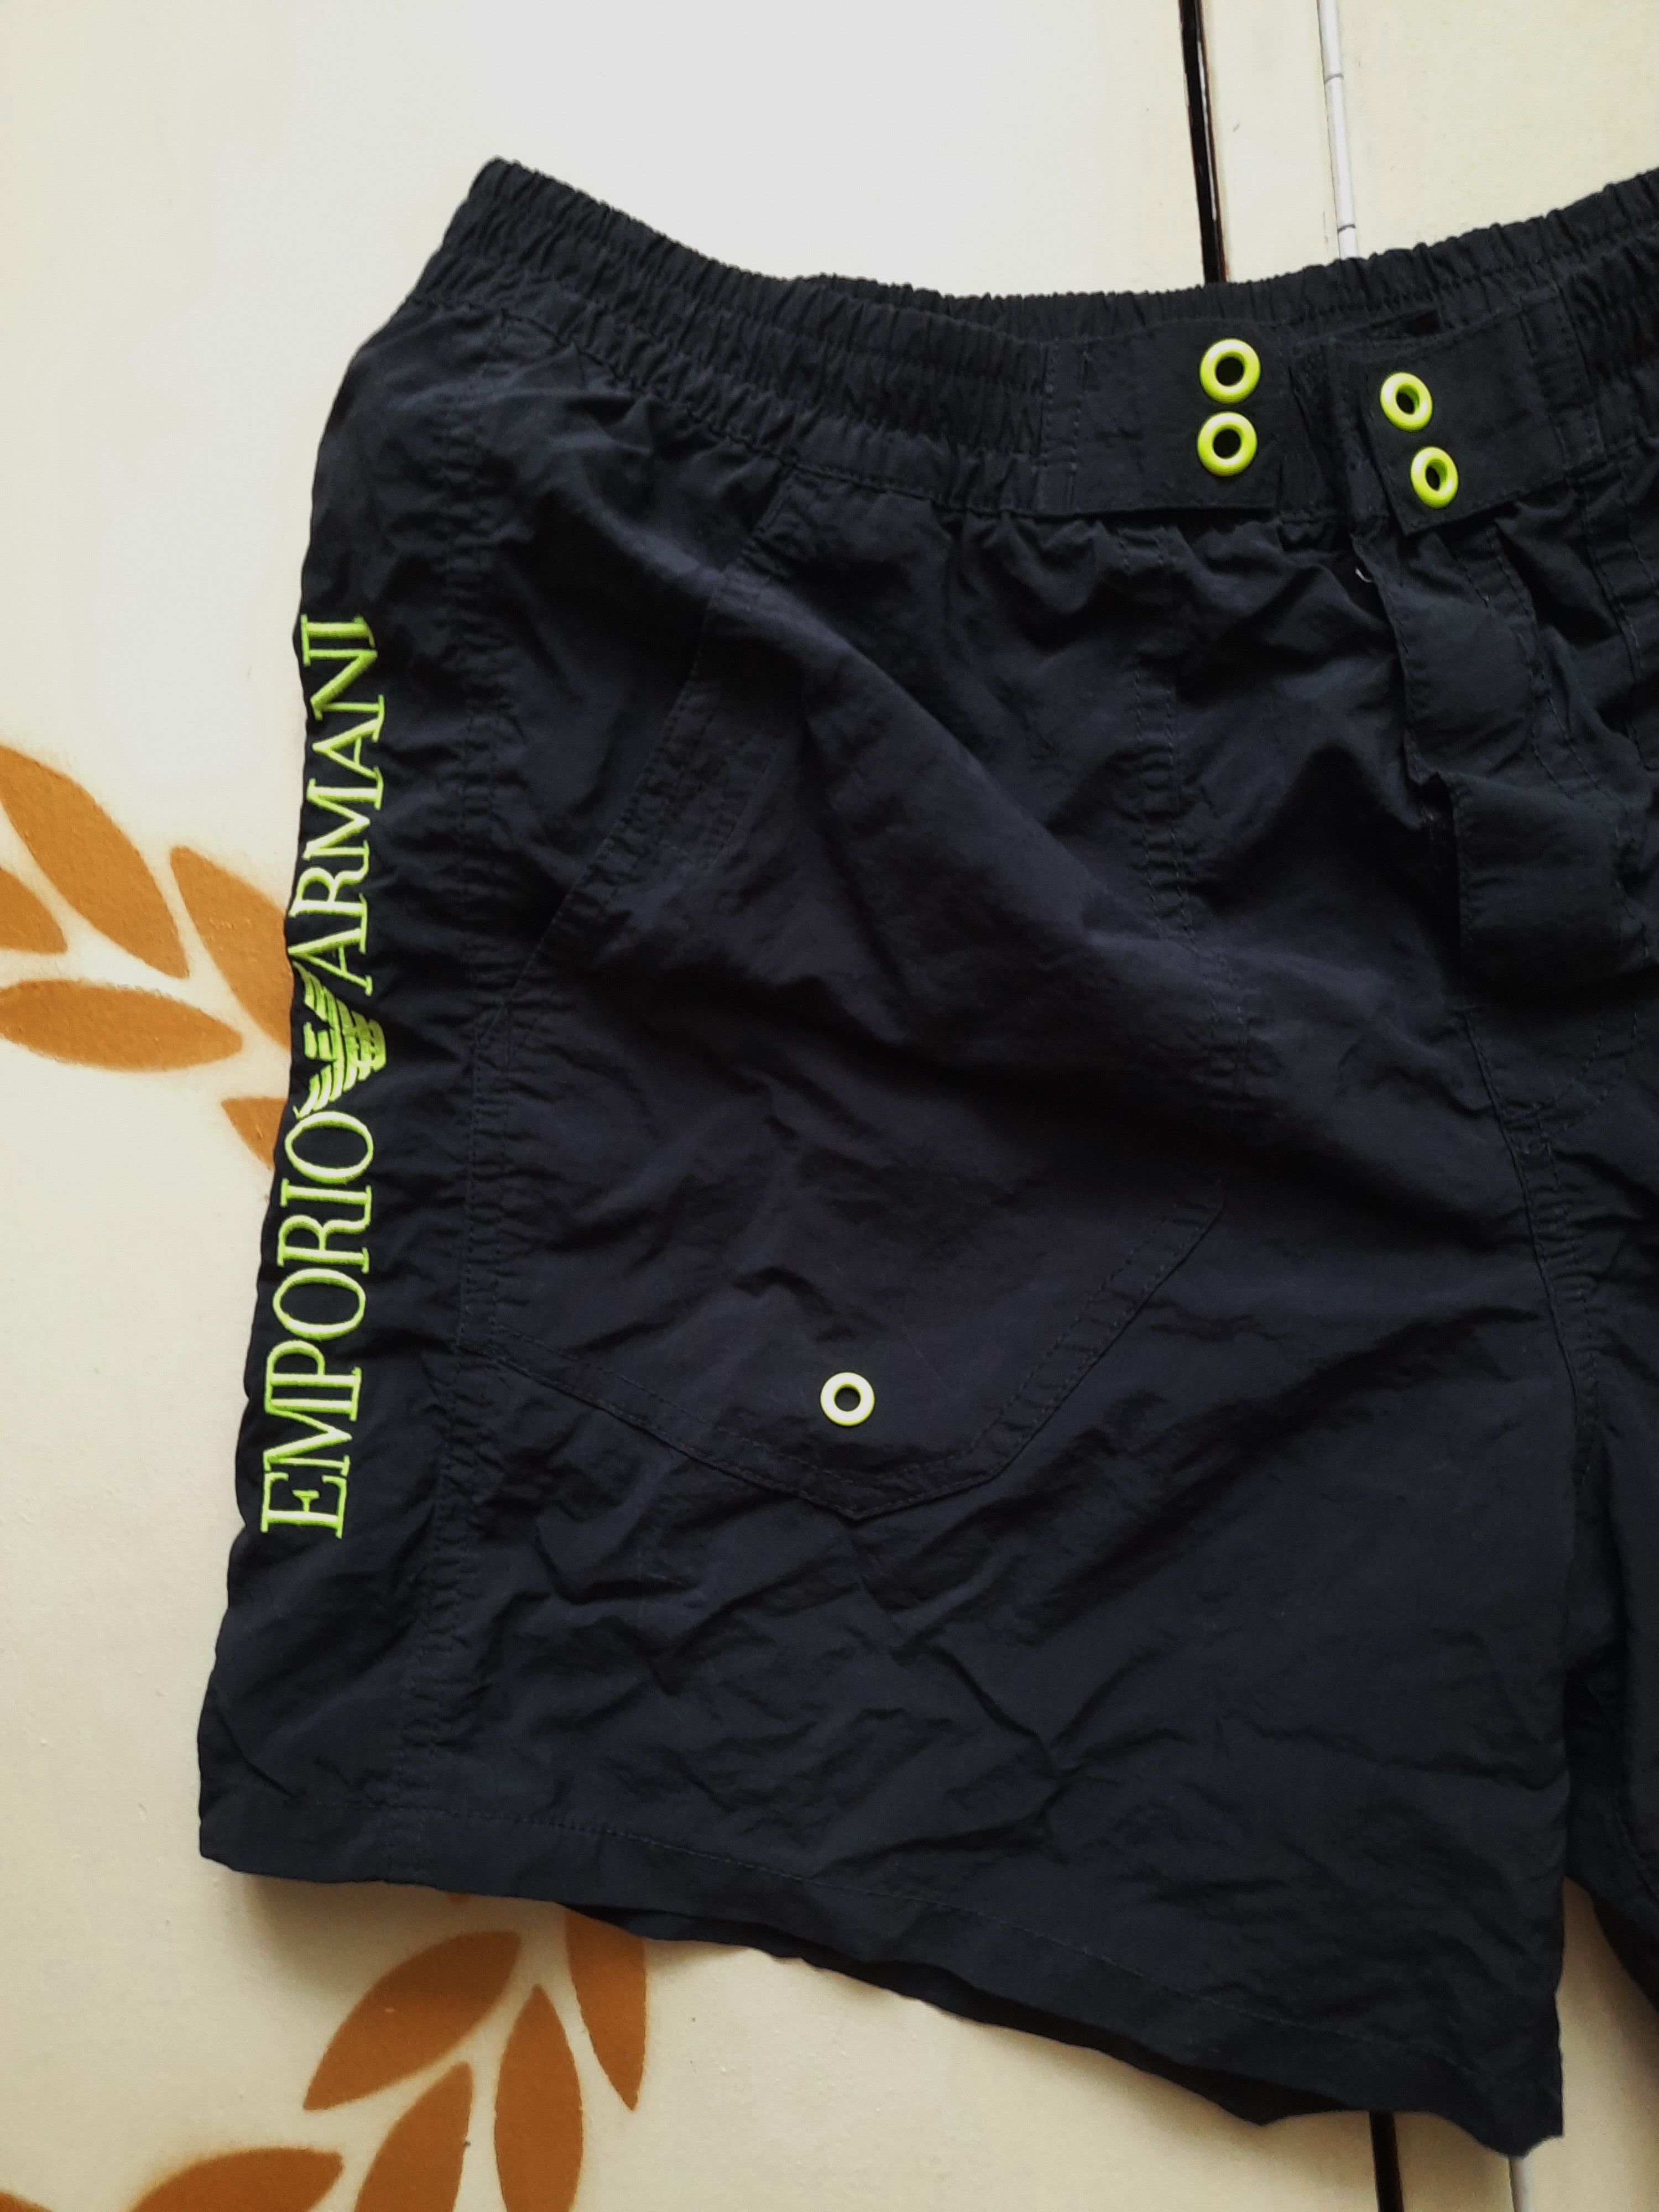 Emporio Armani Emporio Armani Shorts Size US 32 / EU 48 - 2 Preview